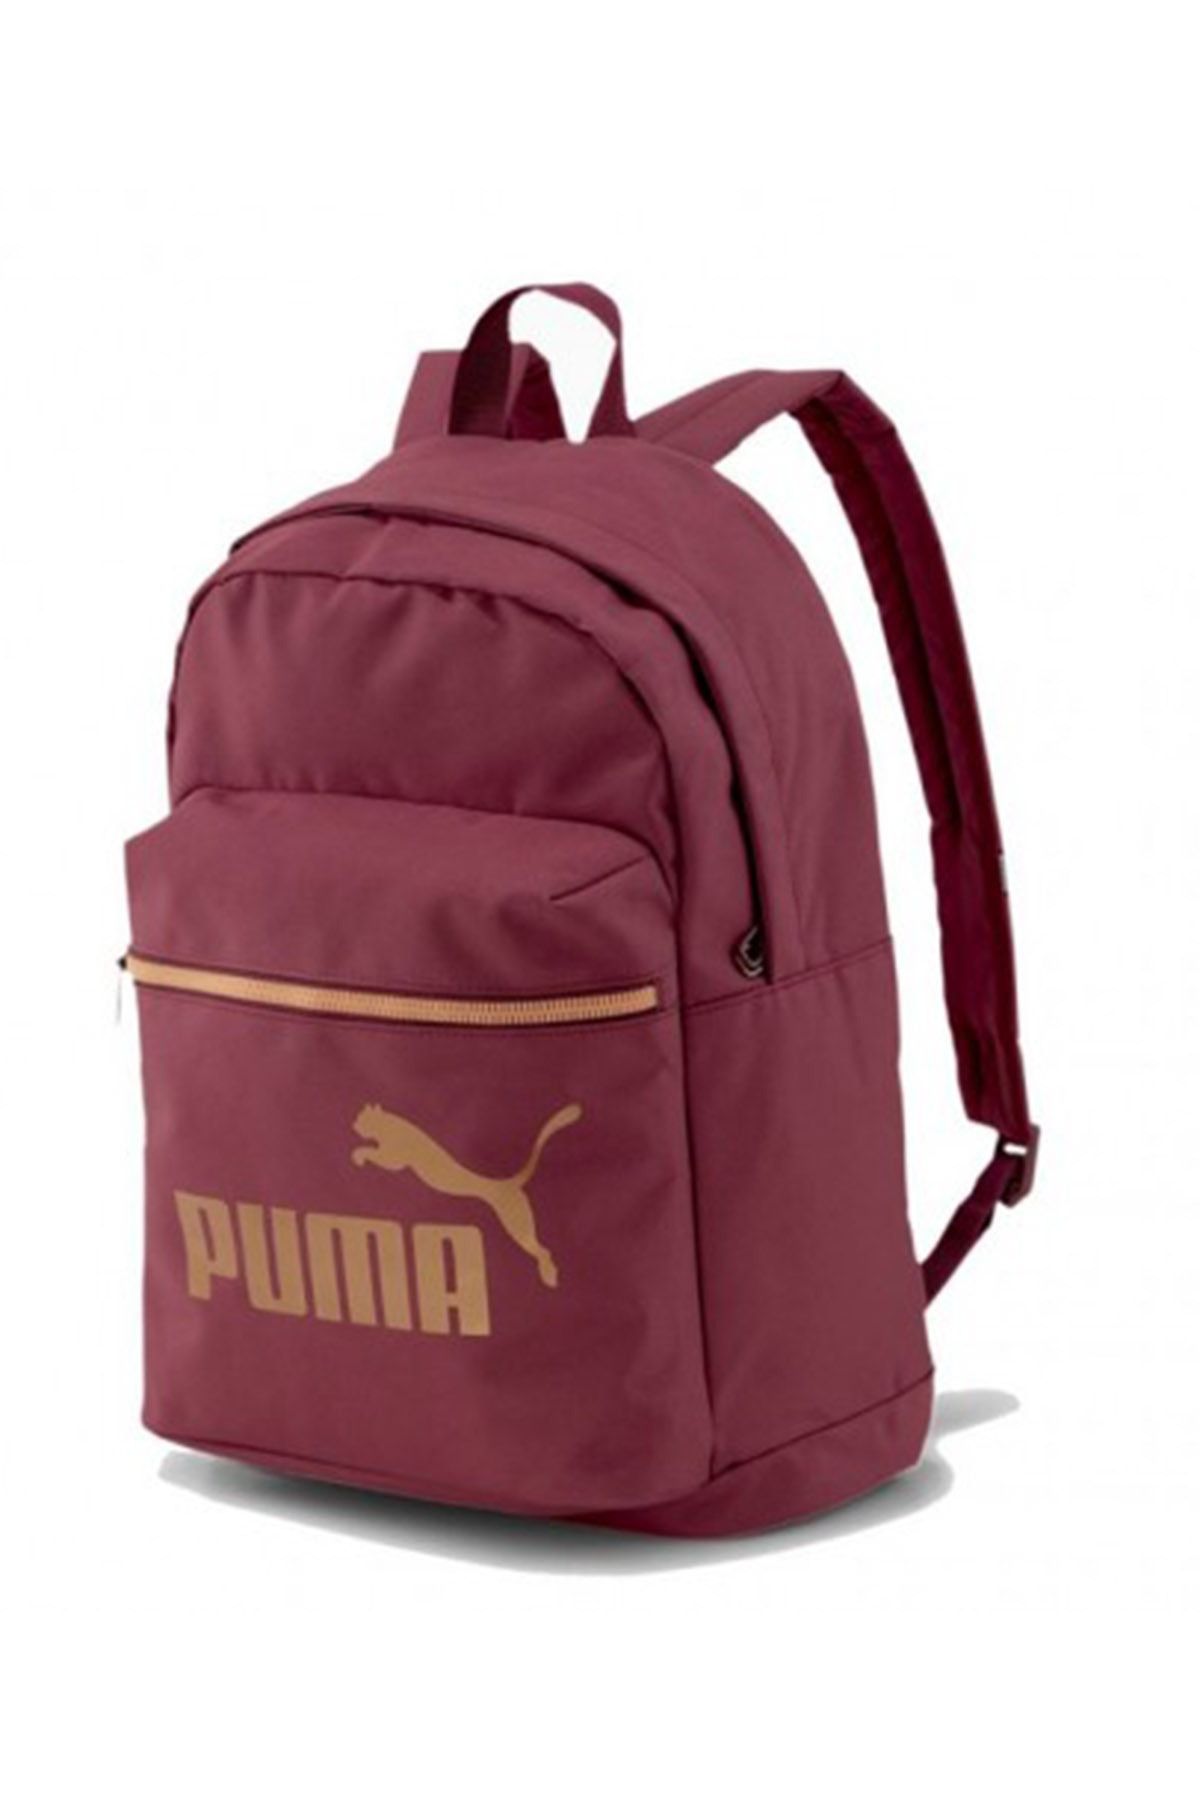 Puma Unisex Bordo Sırt Çantası - WMN Core Base College Bag Burgundy - 07737404